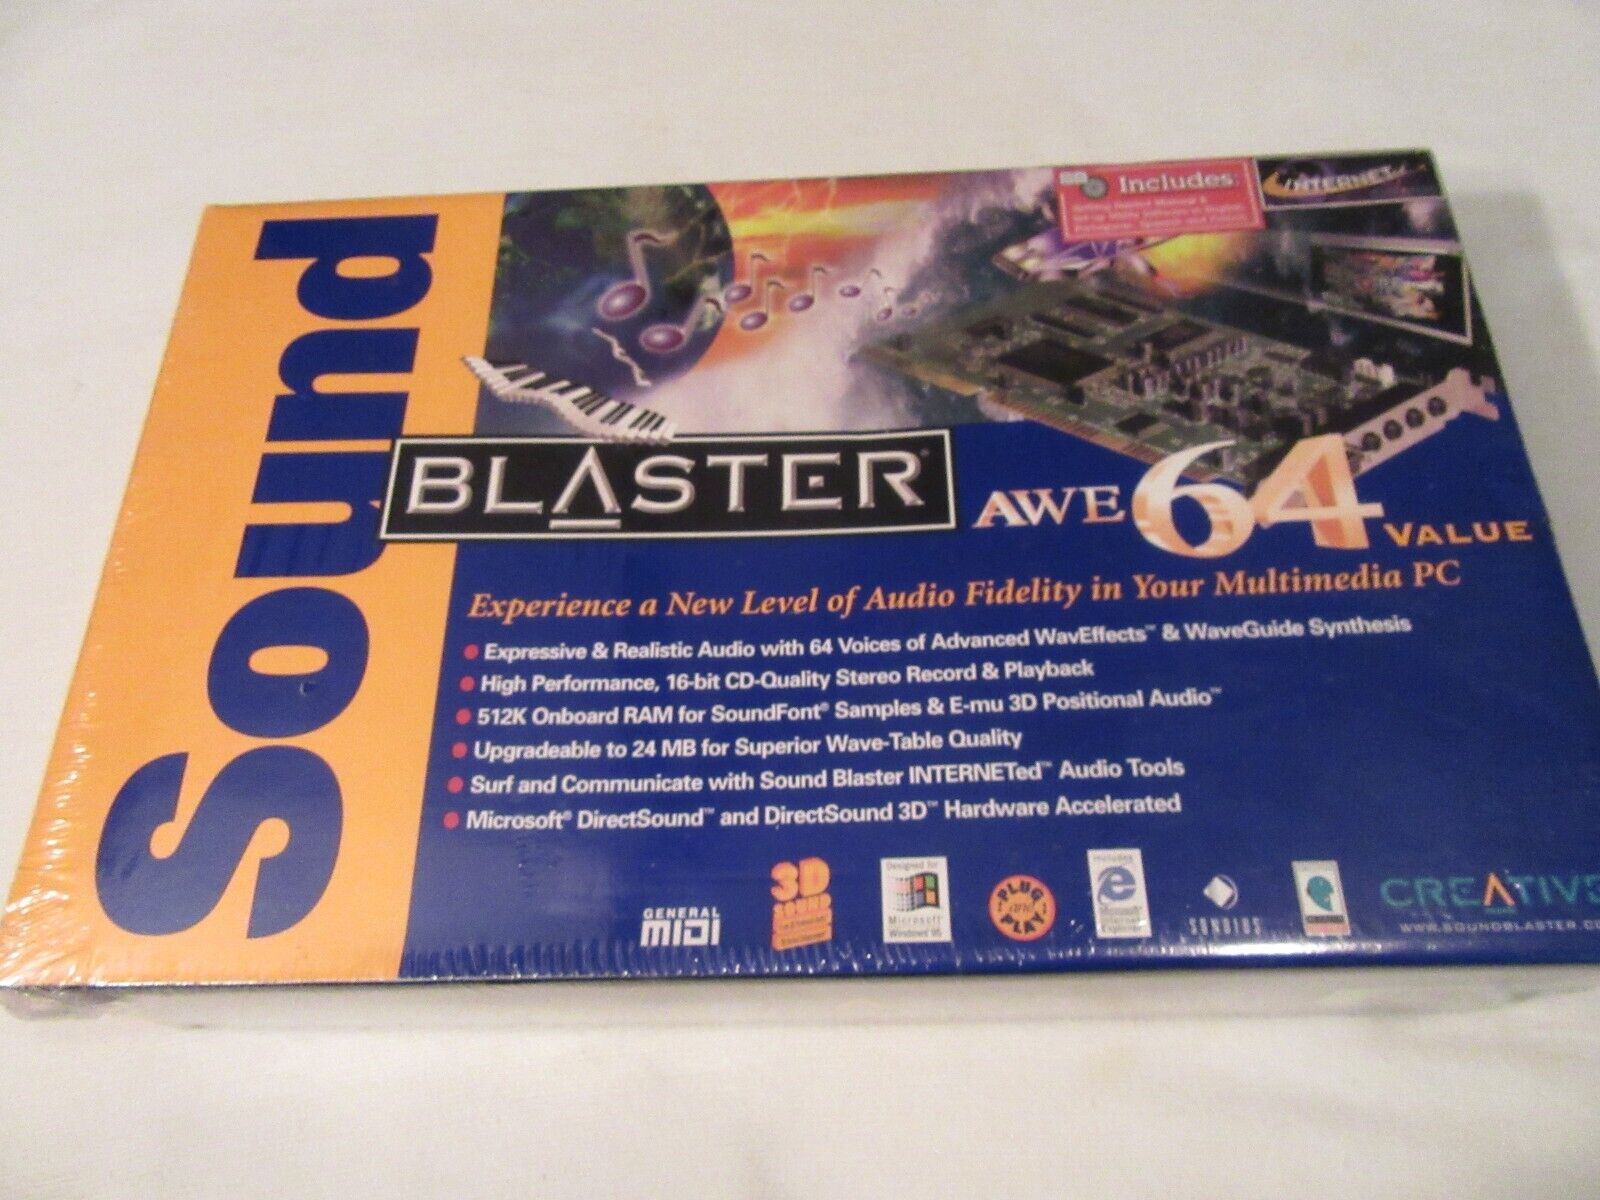 Creative Sound Blaster Awe 64 Value, Model SB4500, Soundcard, New Sealed in Box